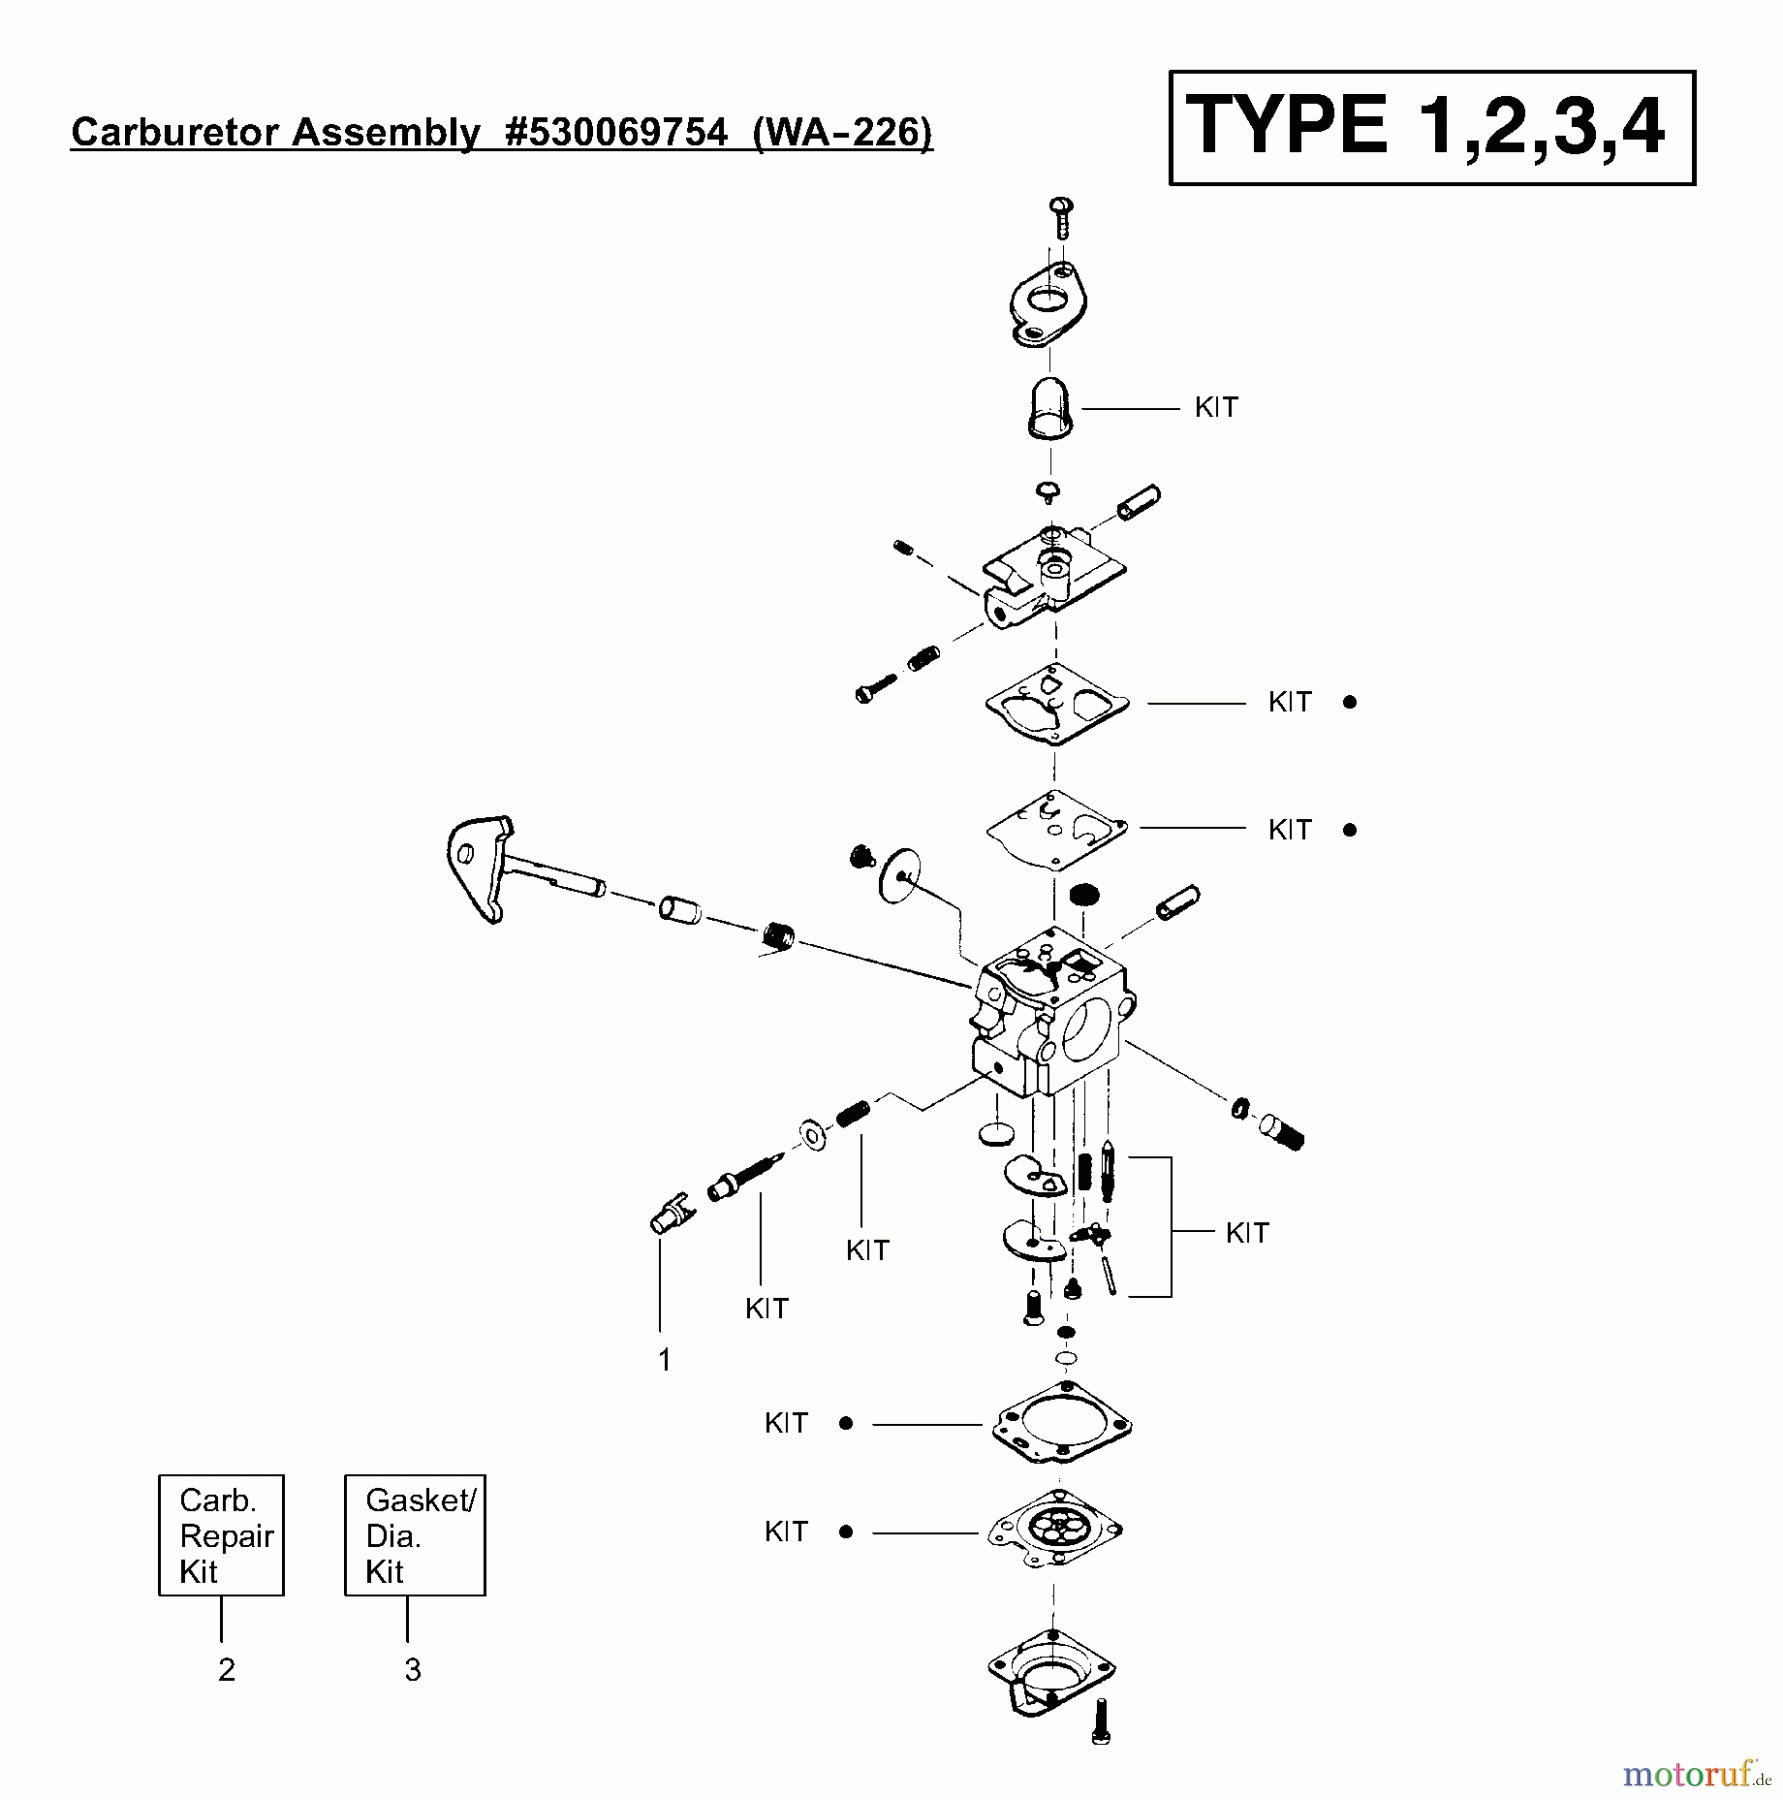  Poulan / Weed Eater Motorsensen, Trimmer TE500CXL (Type 2) - Weed Eater String Trimmer Carburetor Assembly (WA226) P/N 530069754